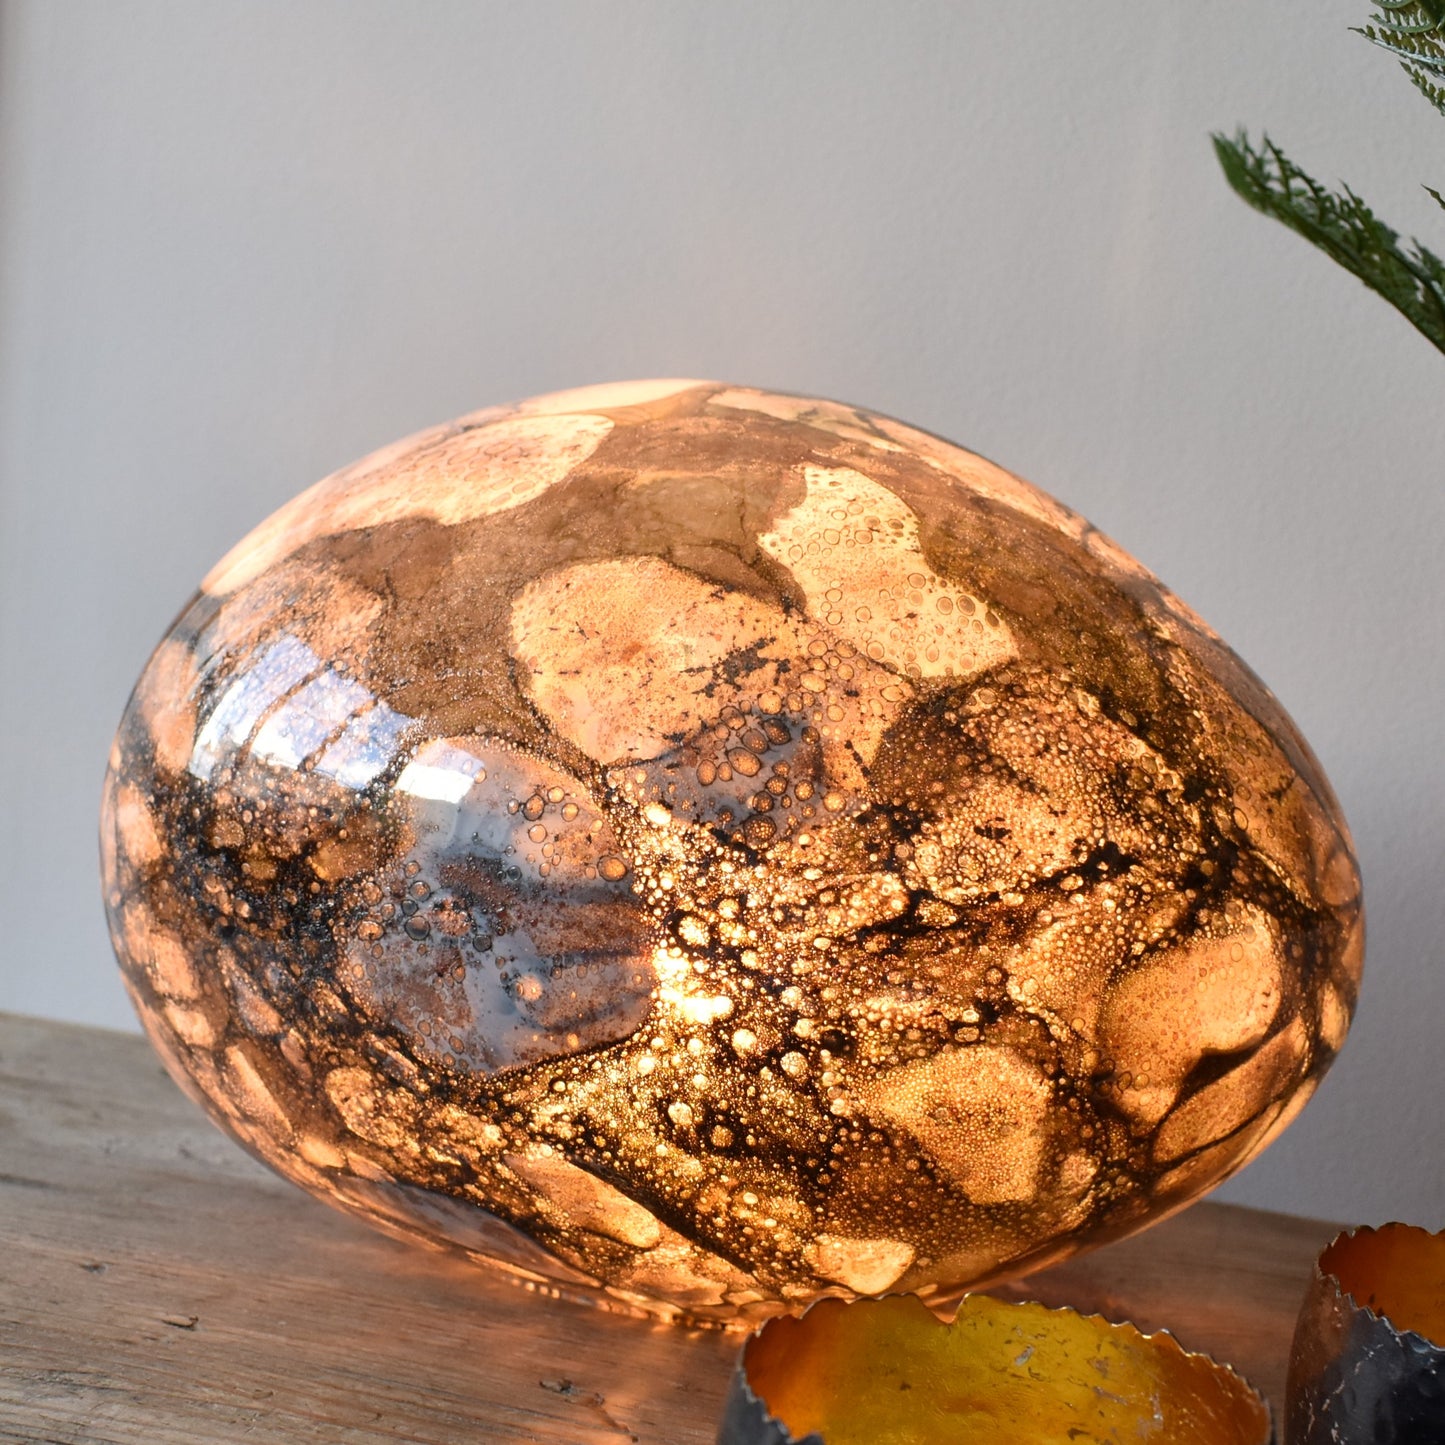 Smoked Quartz Handblown Glass Lamp - Rock